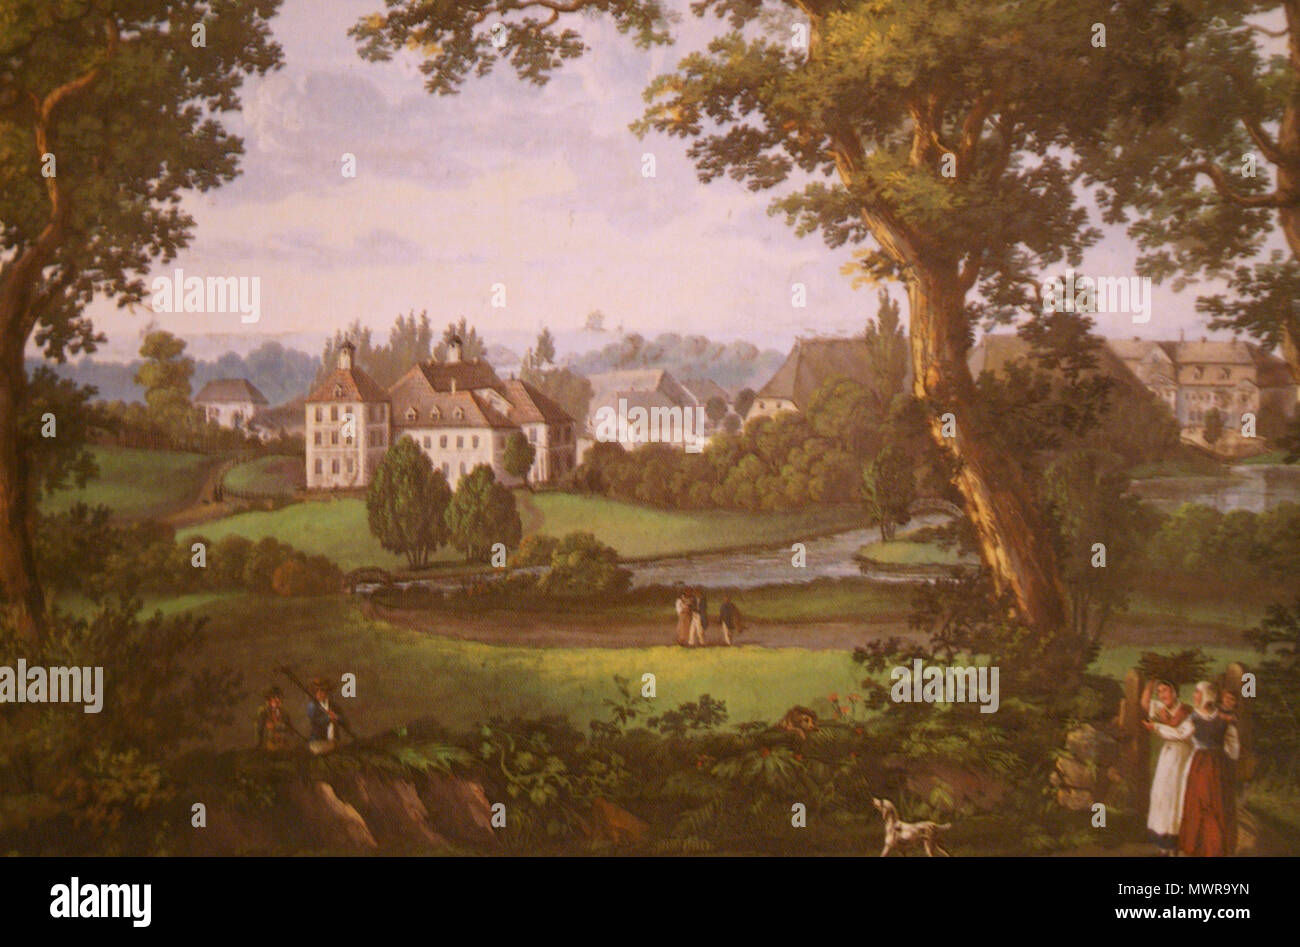 . English: Panker Manor in the 19. Century. Painting by J. L. v. Motz Deutsch: Das Herrenhaus Panker im 19. Jahrhundert, Gemälde von J. L. v. Motz . 1822. J. L. v. Motz 466 Panker 19. Jhd Stock Photo